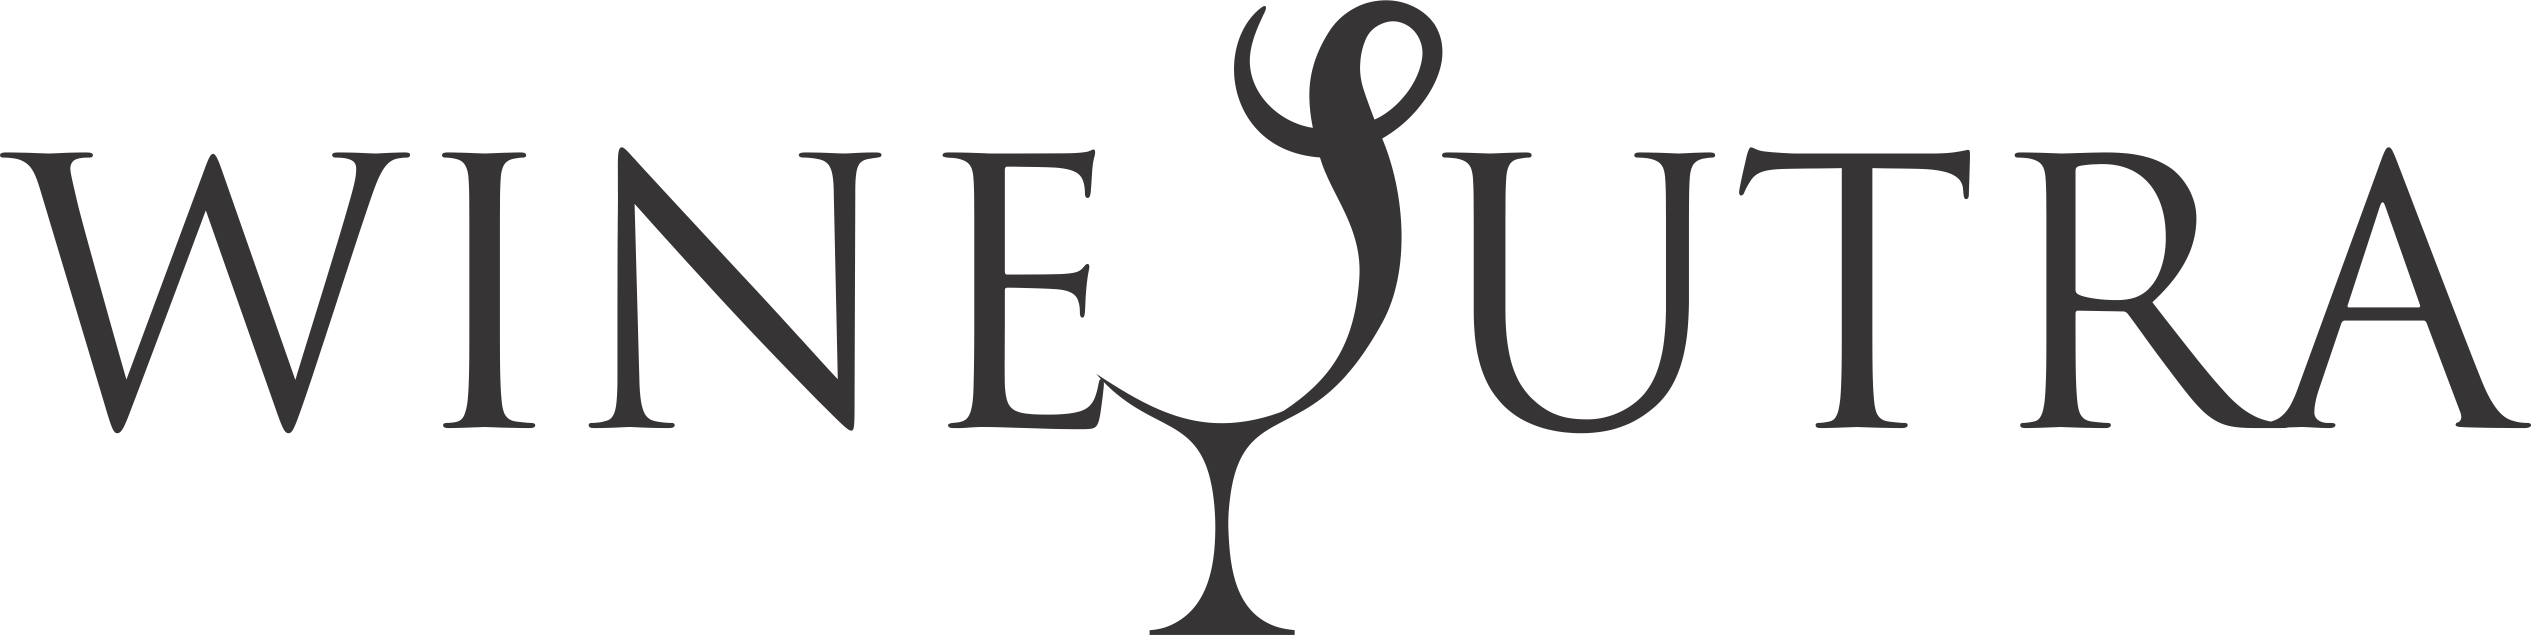 winesutra logo